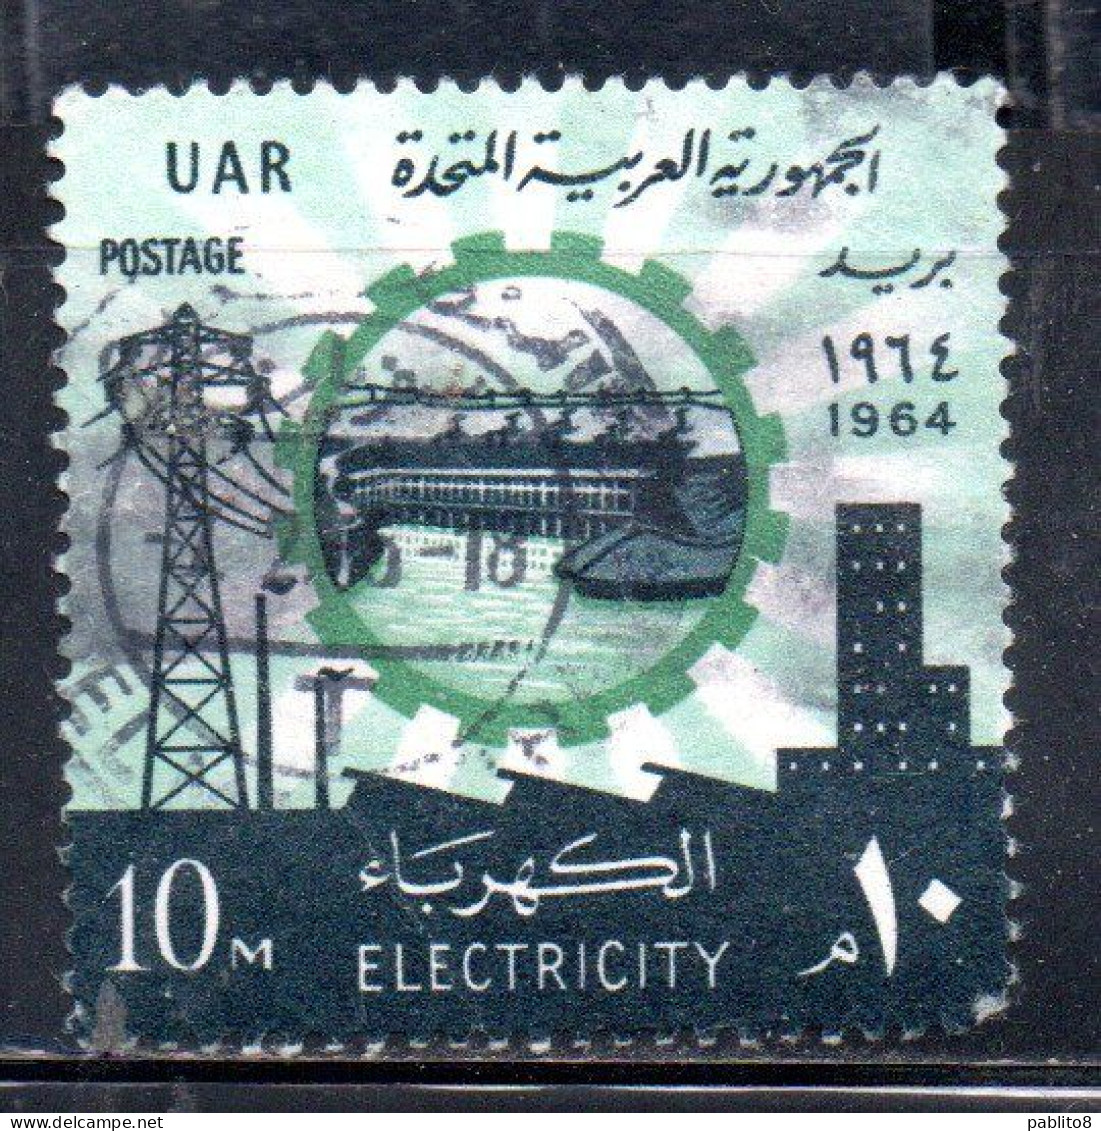 UAR EGYPT EGITTO 1964 ELECTRICITY ASWAN HIGH DAM HYDROELICTRIC POWER STATION LAND RECLAMATION 10m USED USATO - Gebruikt